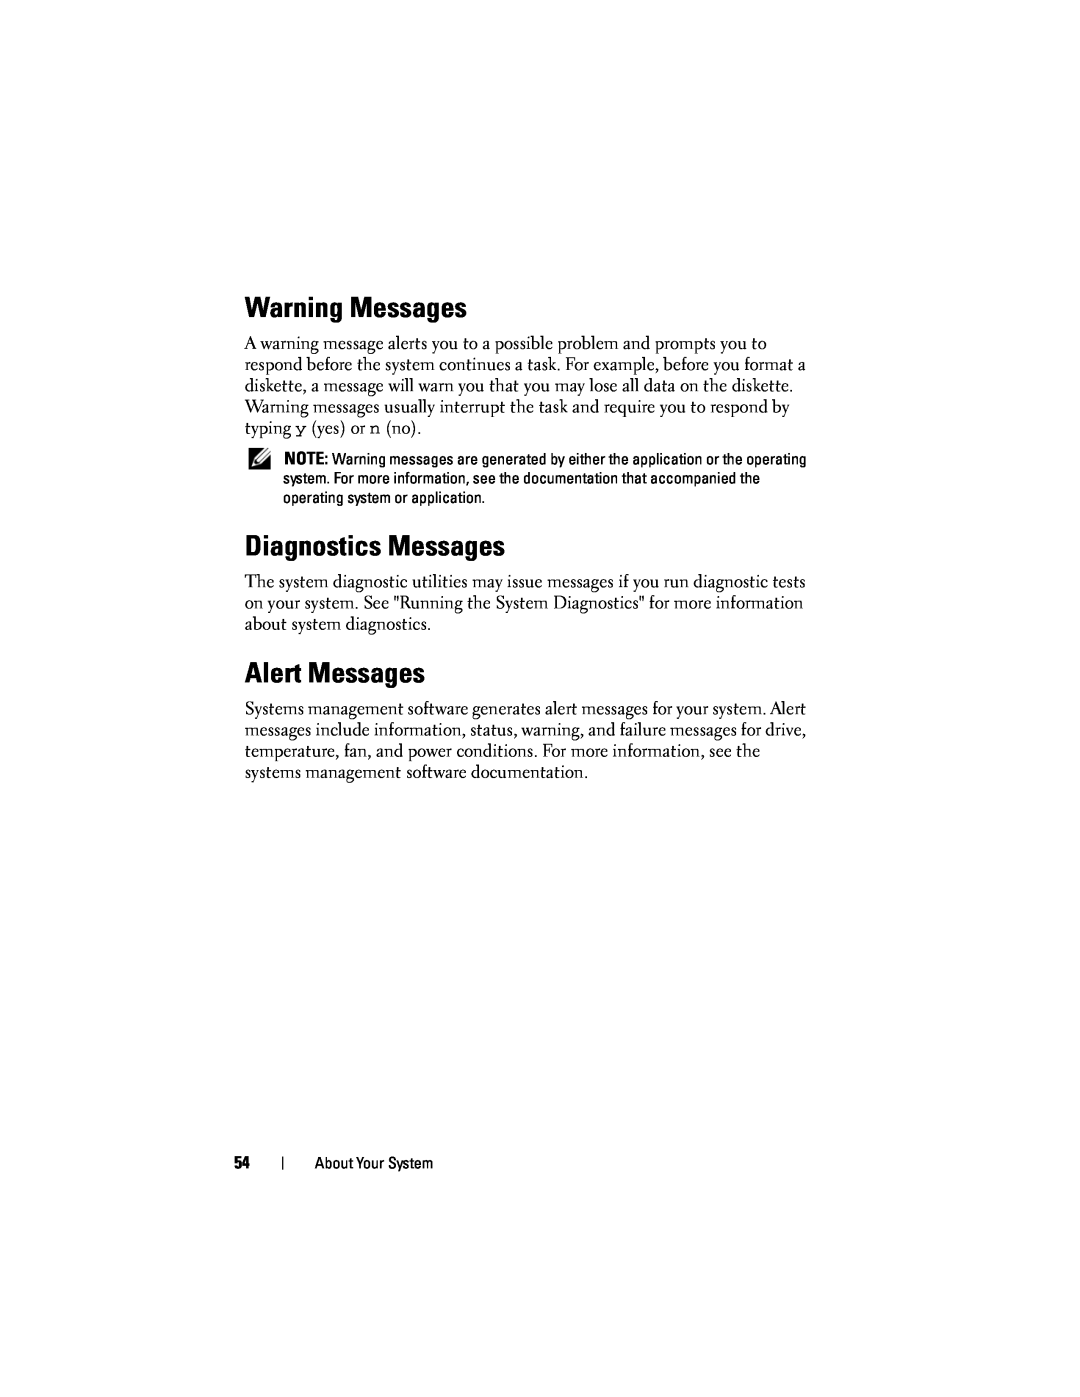 Dell R610 owner manual Warning Messages, Diagnostics Messages, Alert Messages 